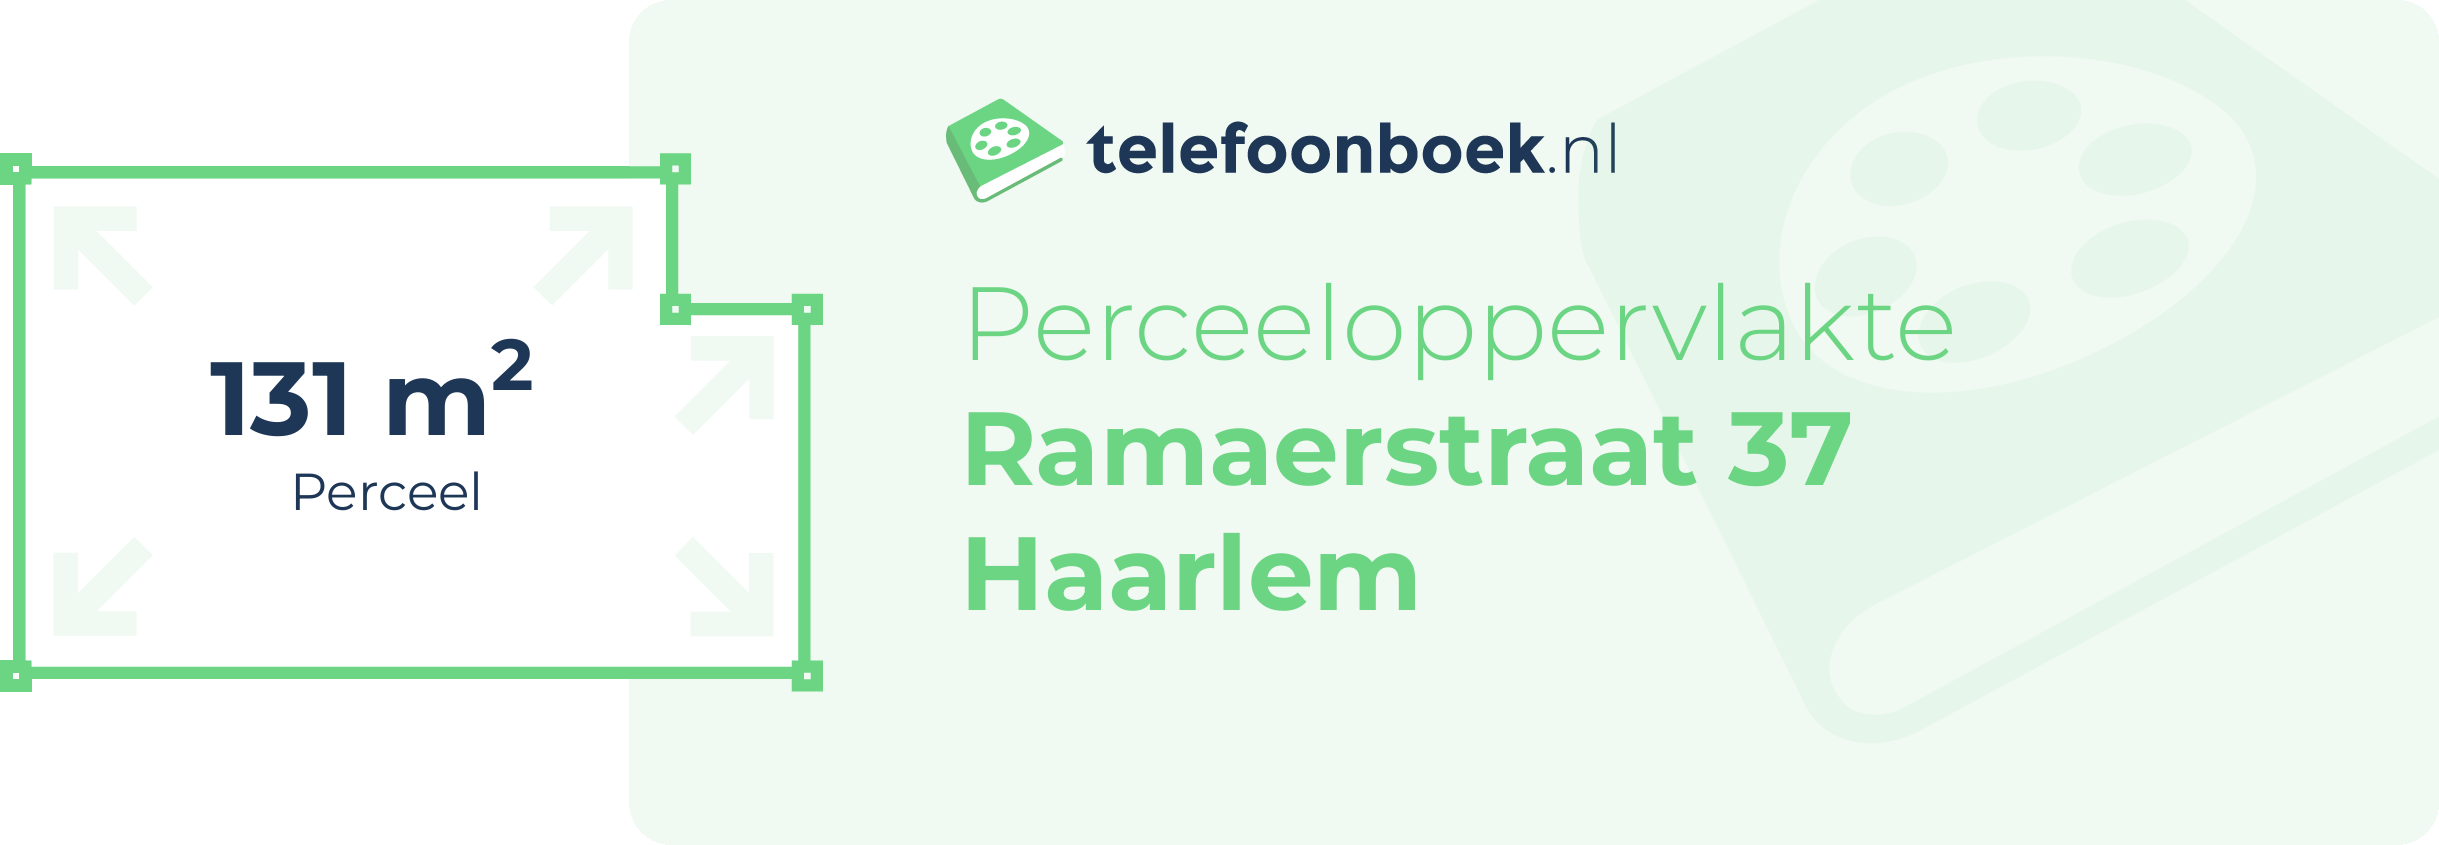 Perceeloppervlakte Ramaerstraat 37 Haarlem